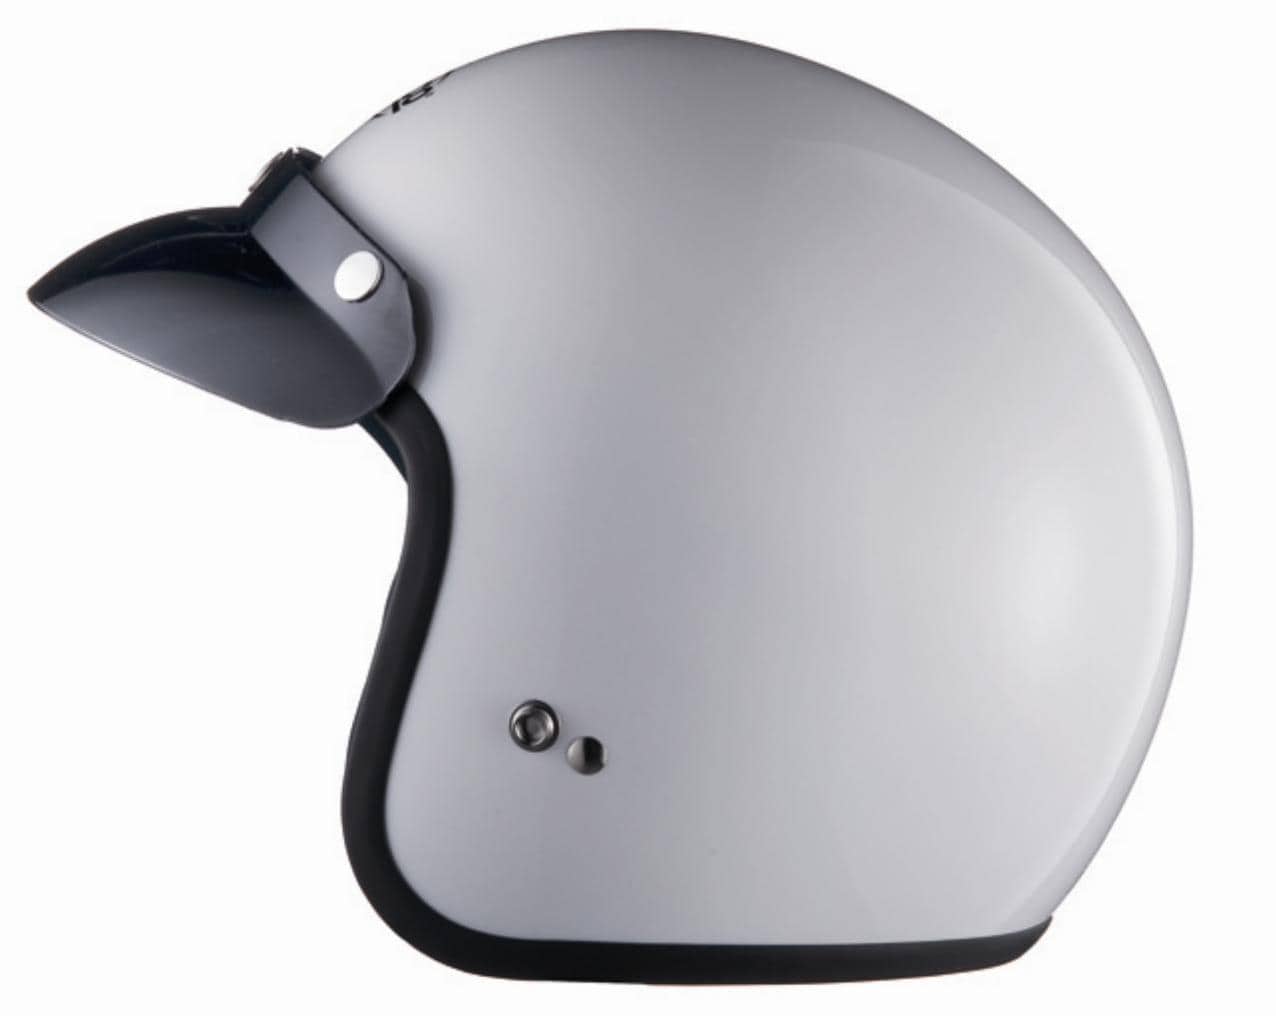 Helmet Sparco Club J-1 White